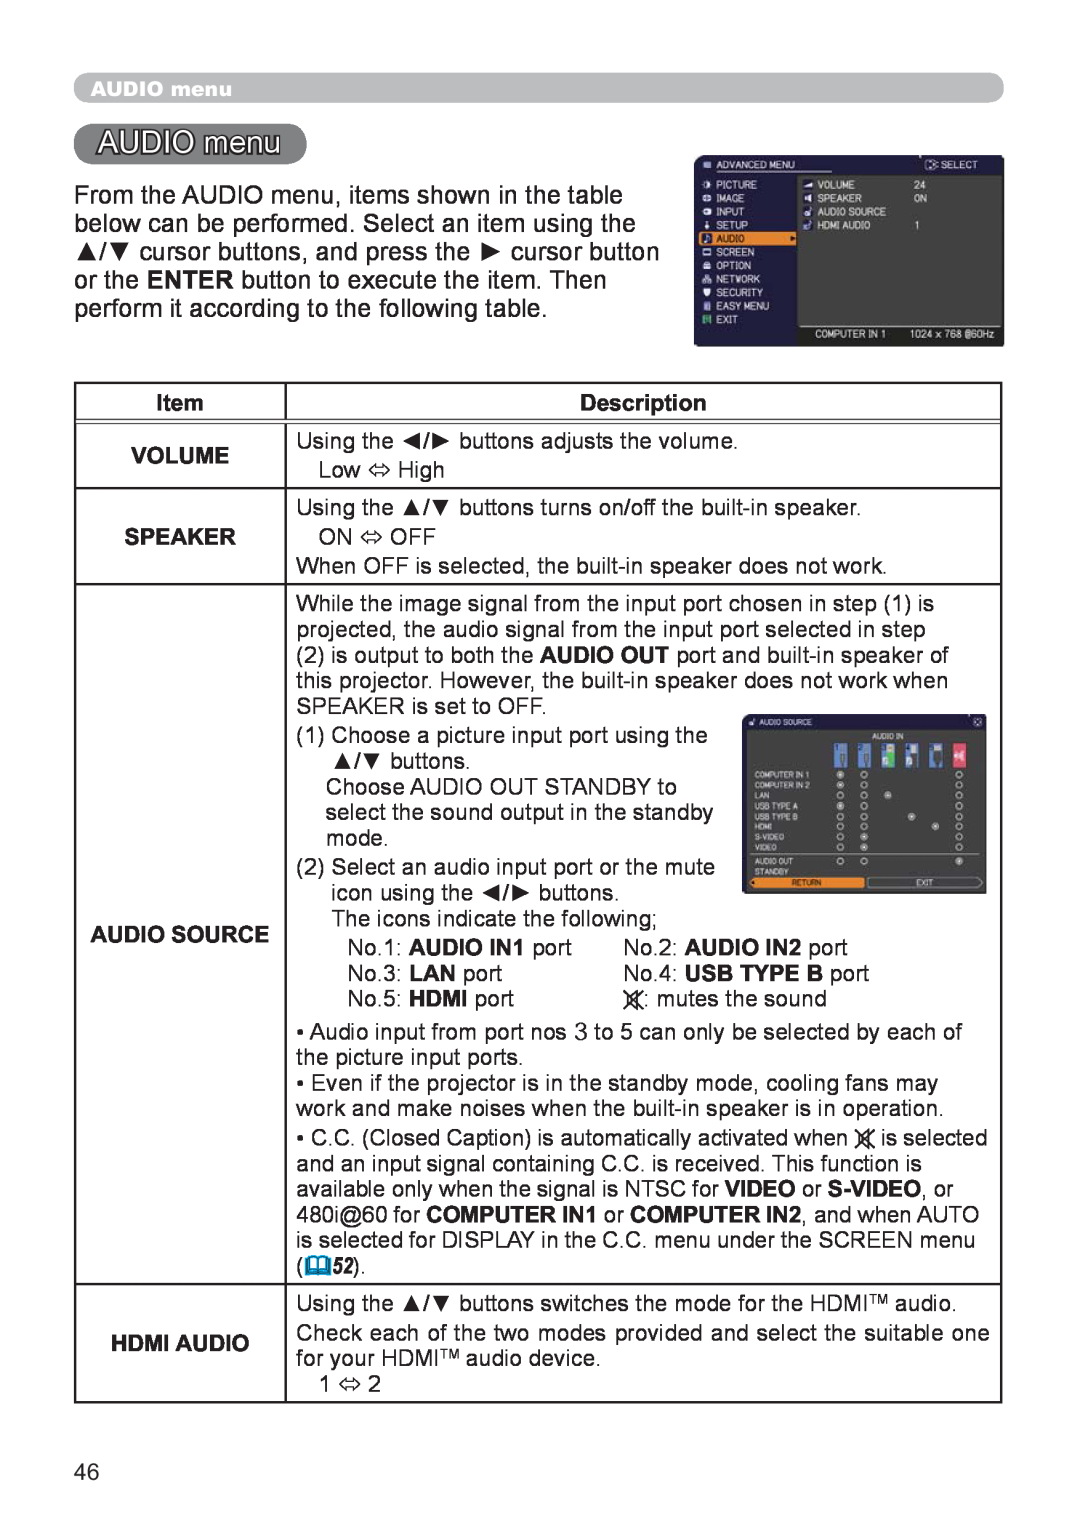 Hitachi CP-X2521WN AUDIO menu, Item, Description, Volume, Speaker, Audio Source, No.4: USB TYPE B port, Hdmi Audio 